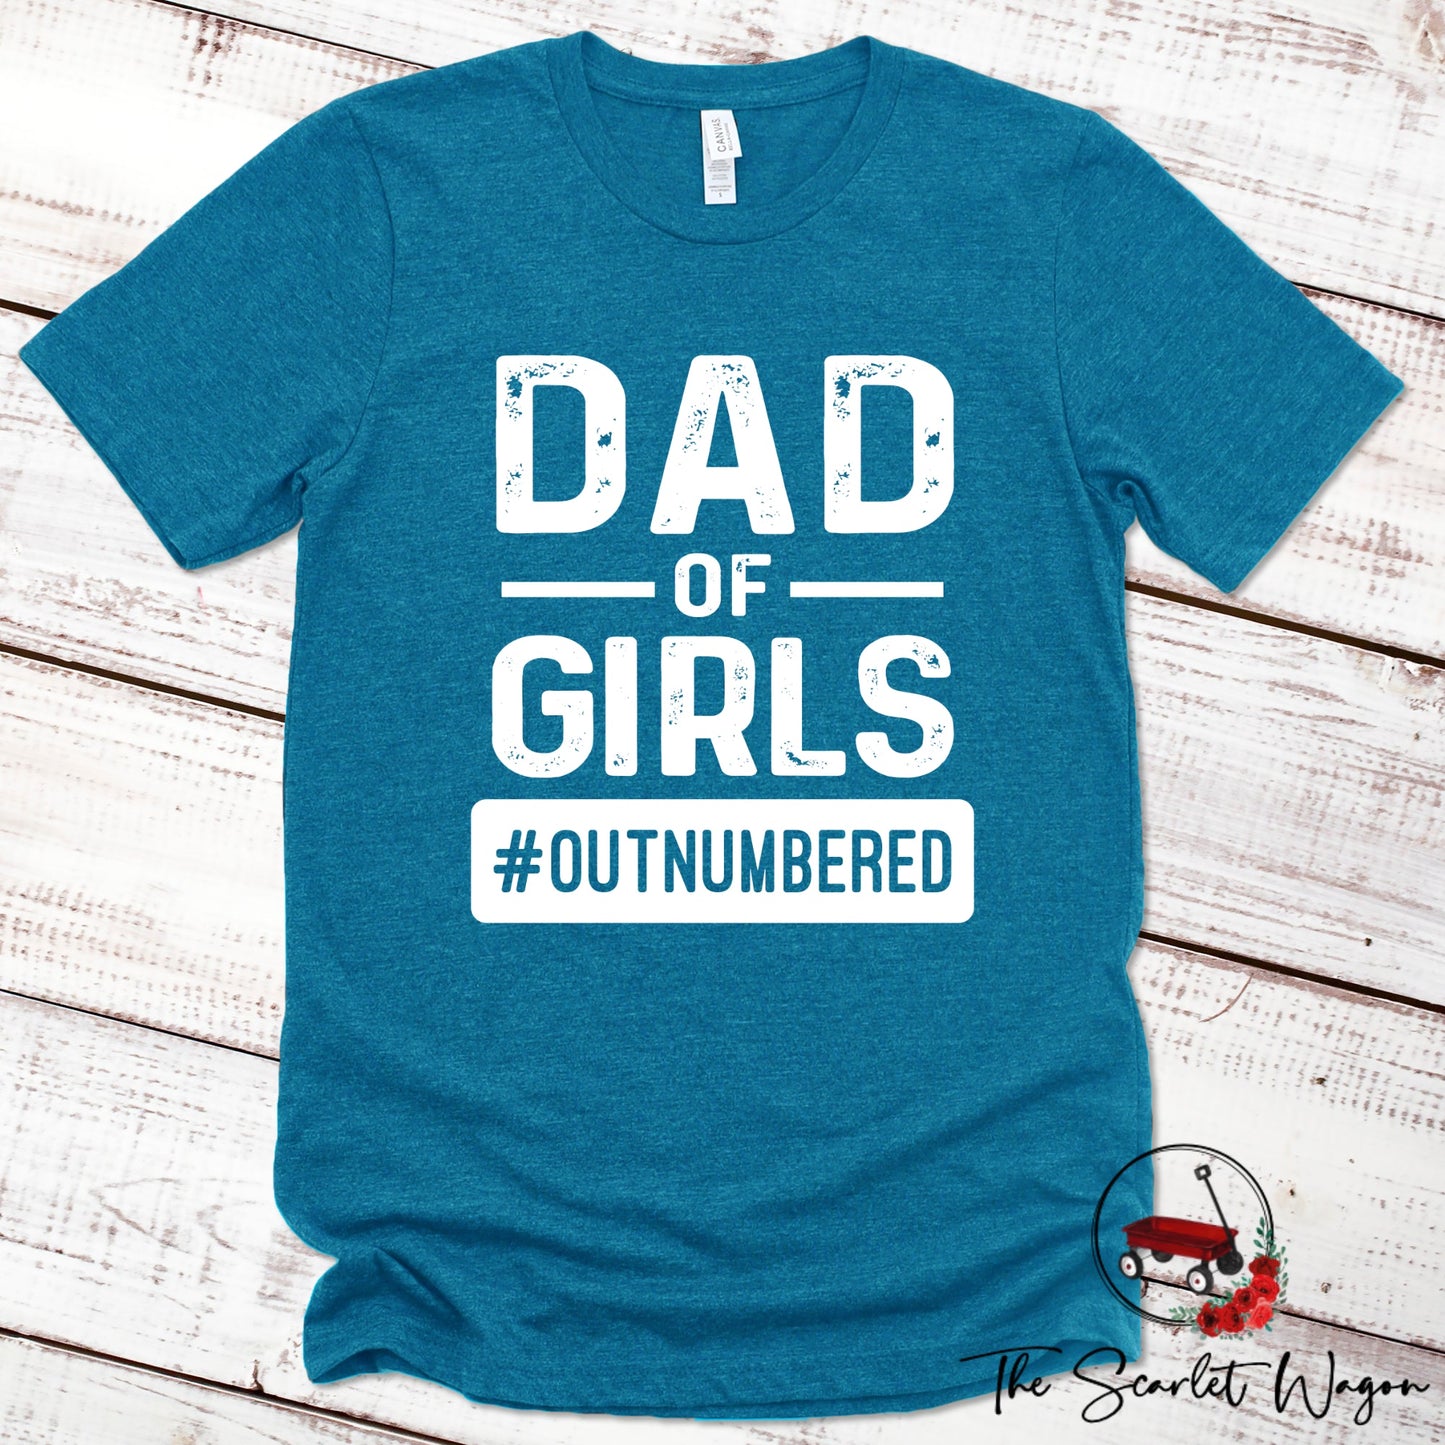 Dad of Girls #Outnumbered Premium Tee Scarlet Wagon Heather Deep Teal XS 